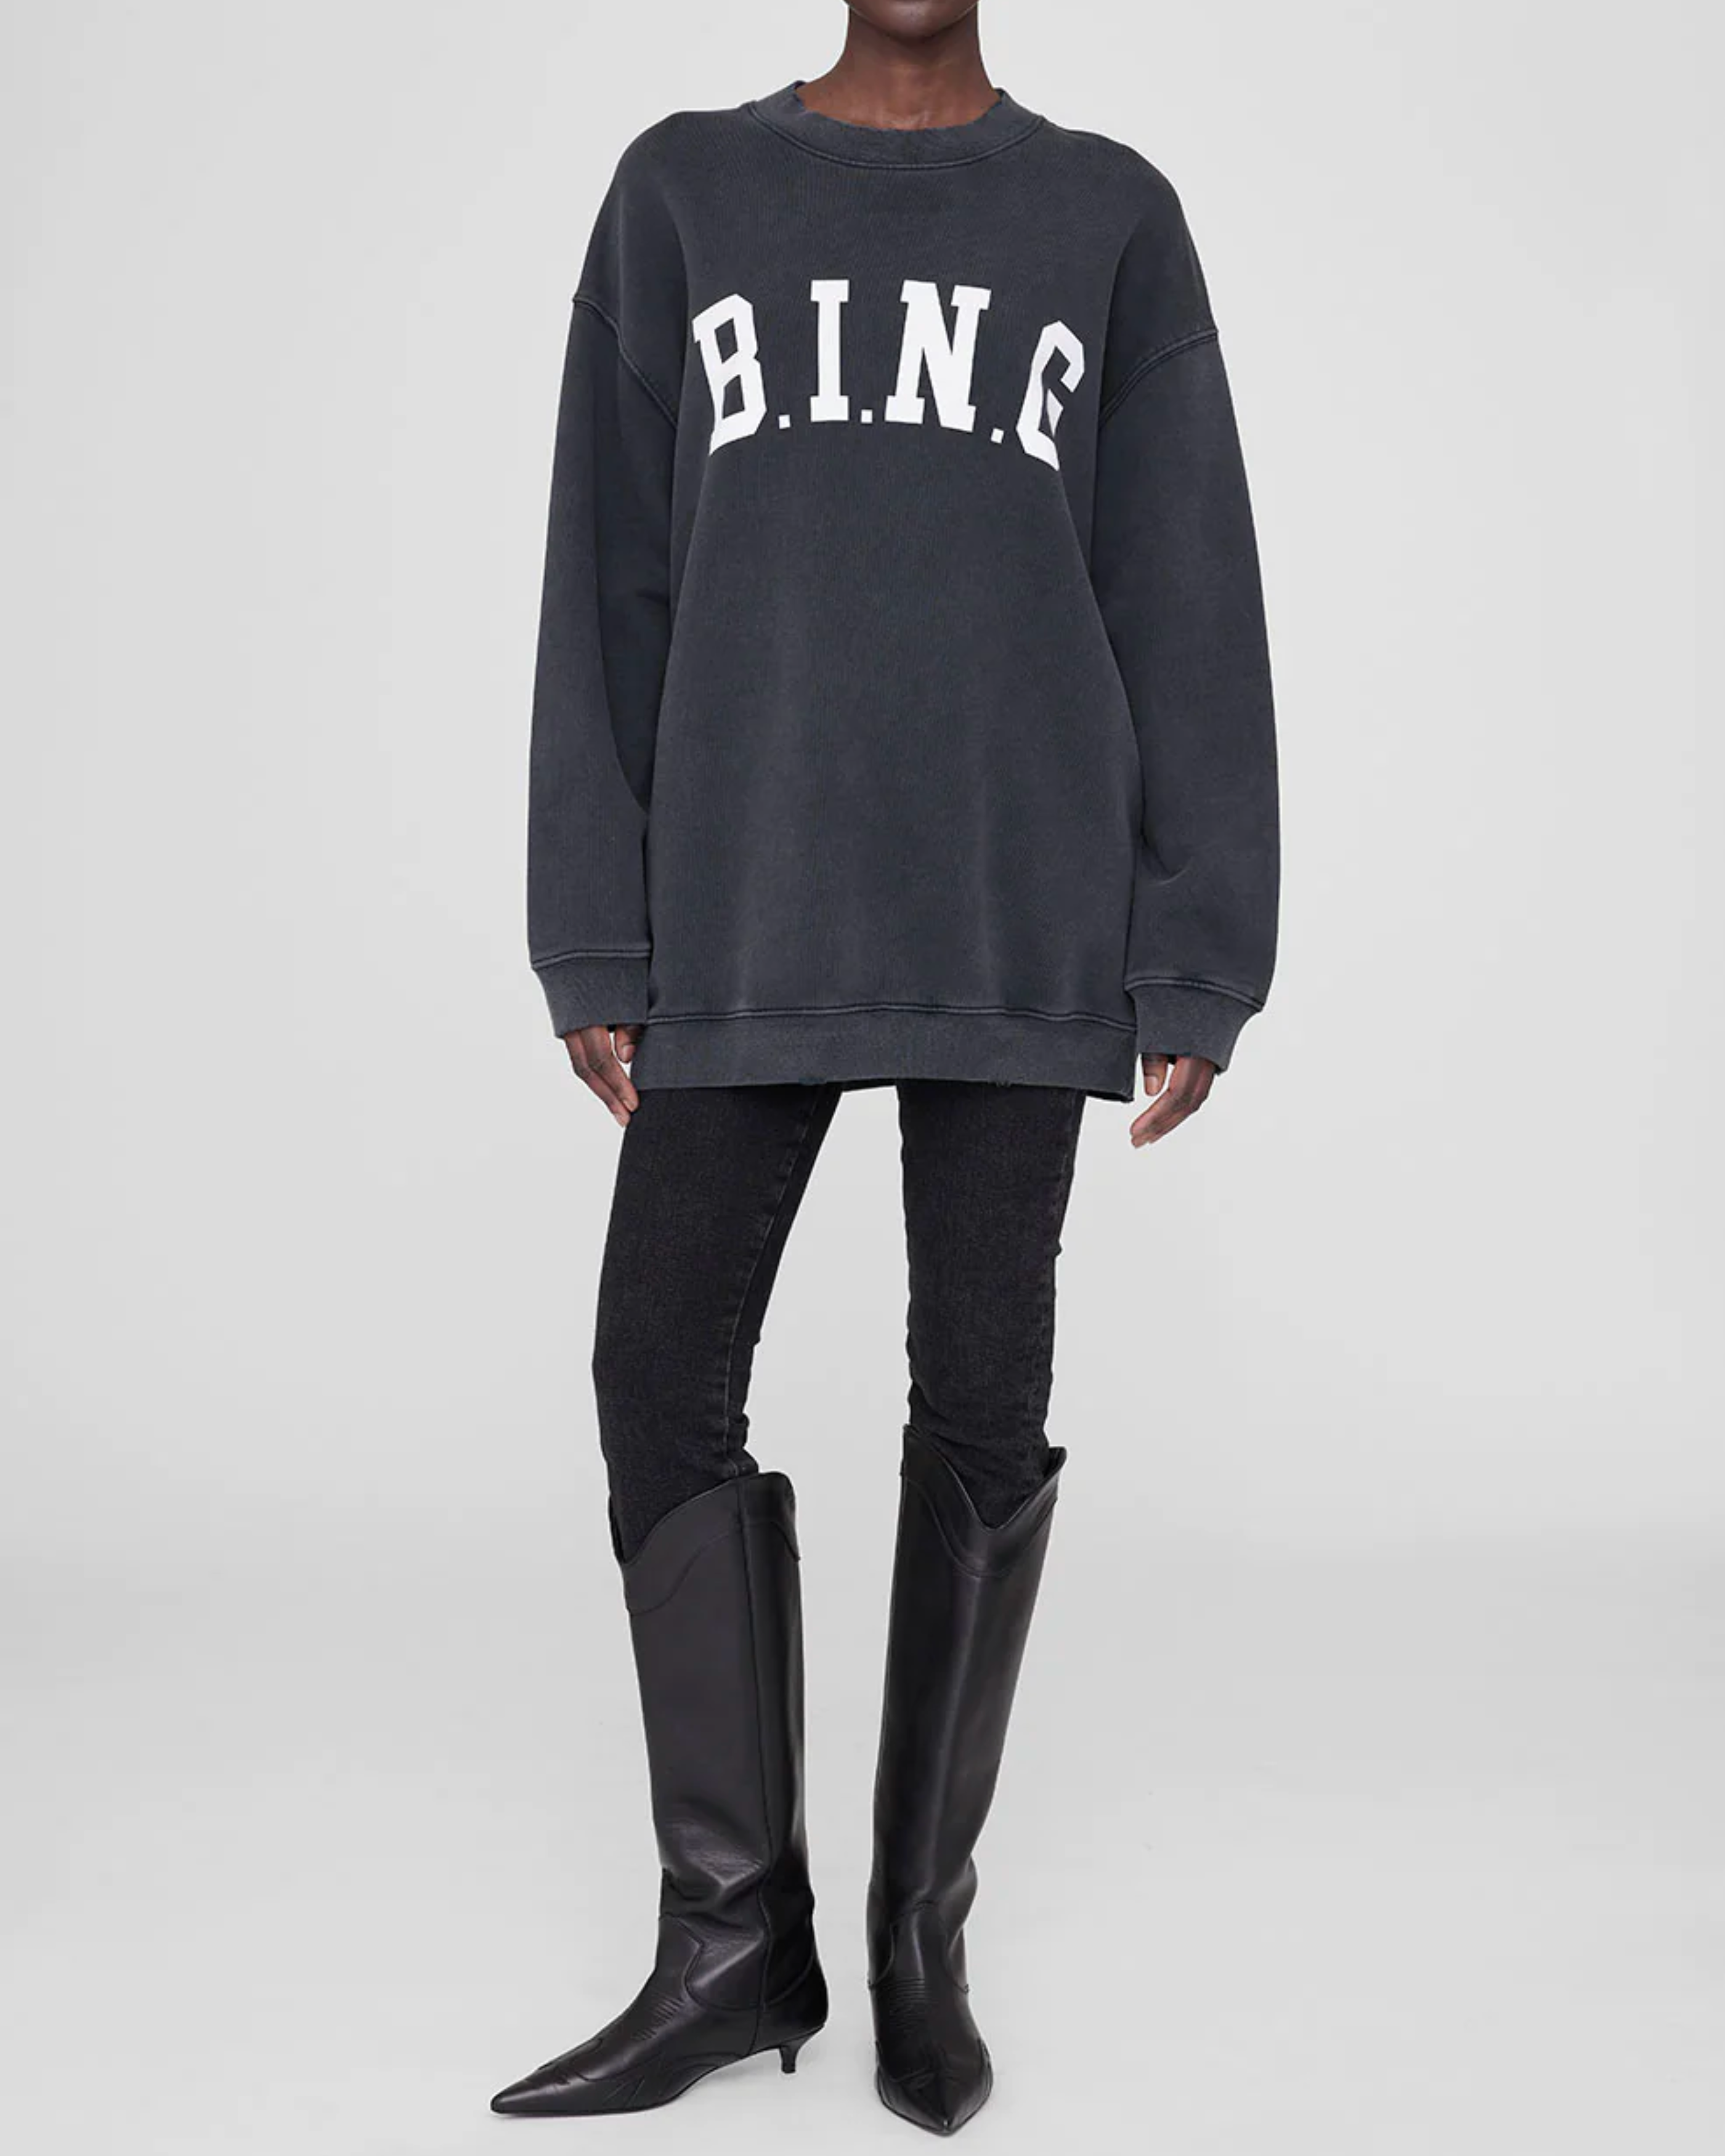 Anine Bing Tyler B.I.N.G Sweatshirt in Washed Black